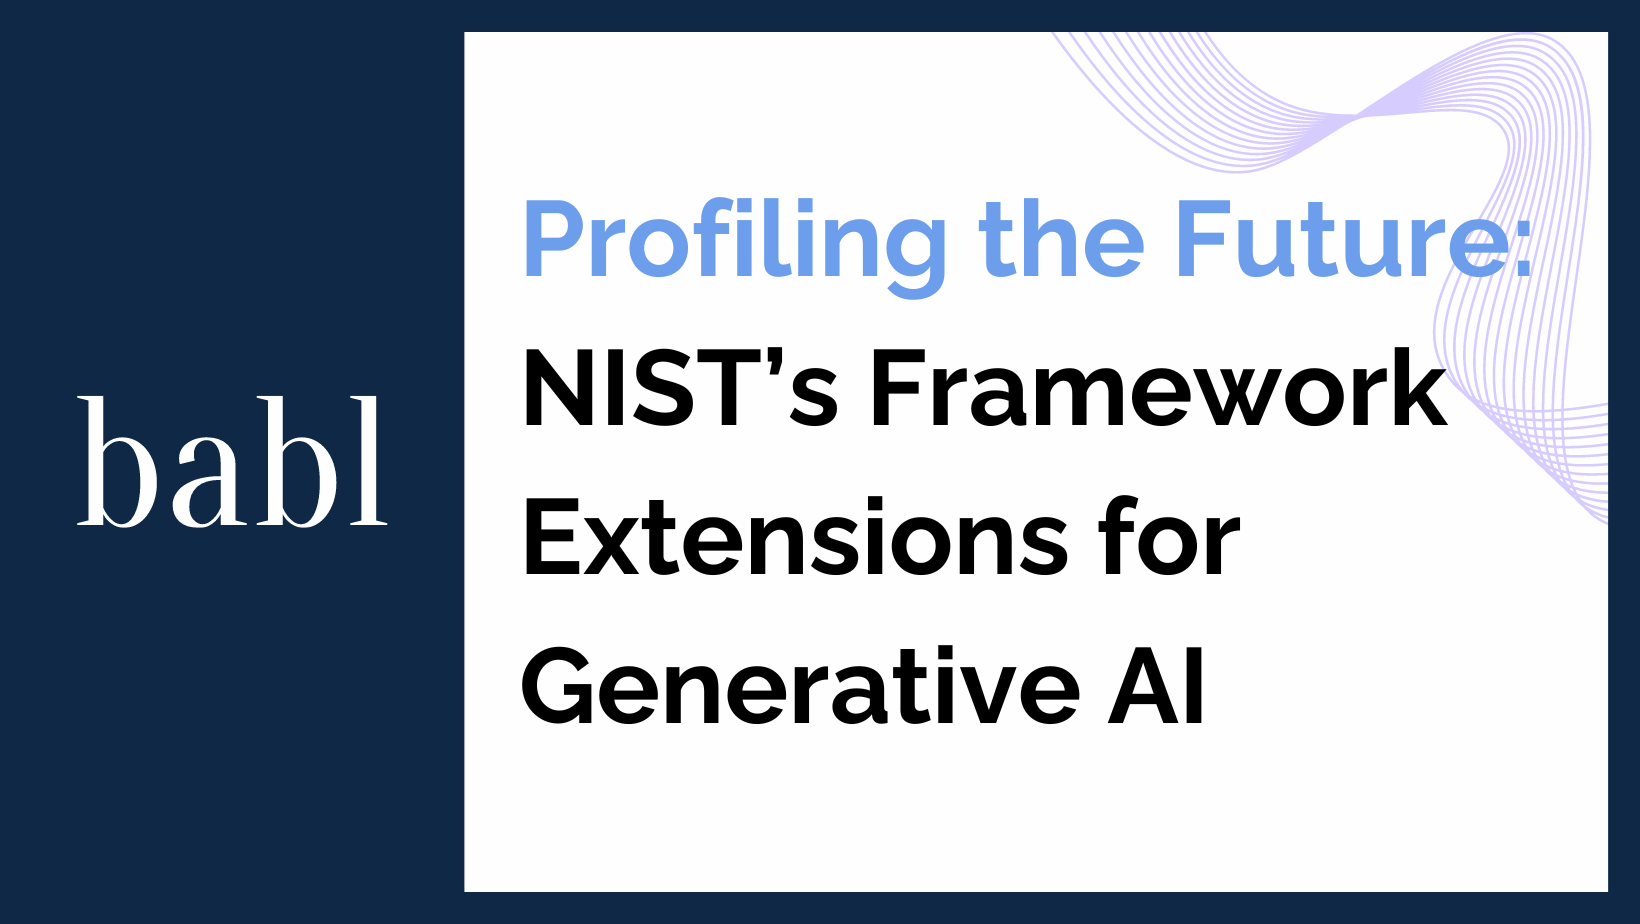 Profiling the Future: NIST’s Framework Extensions for Generative Al